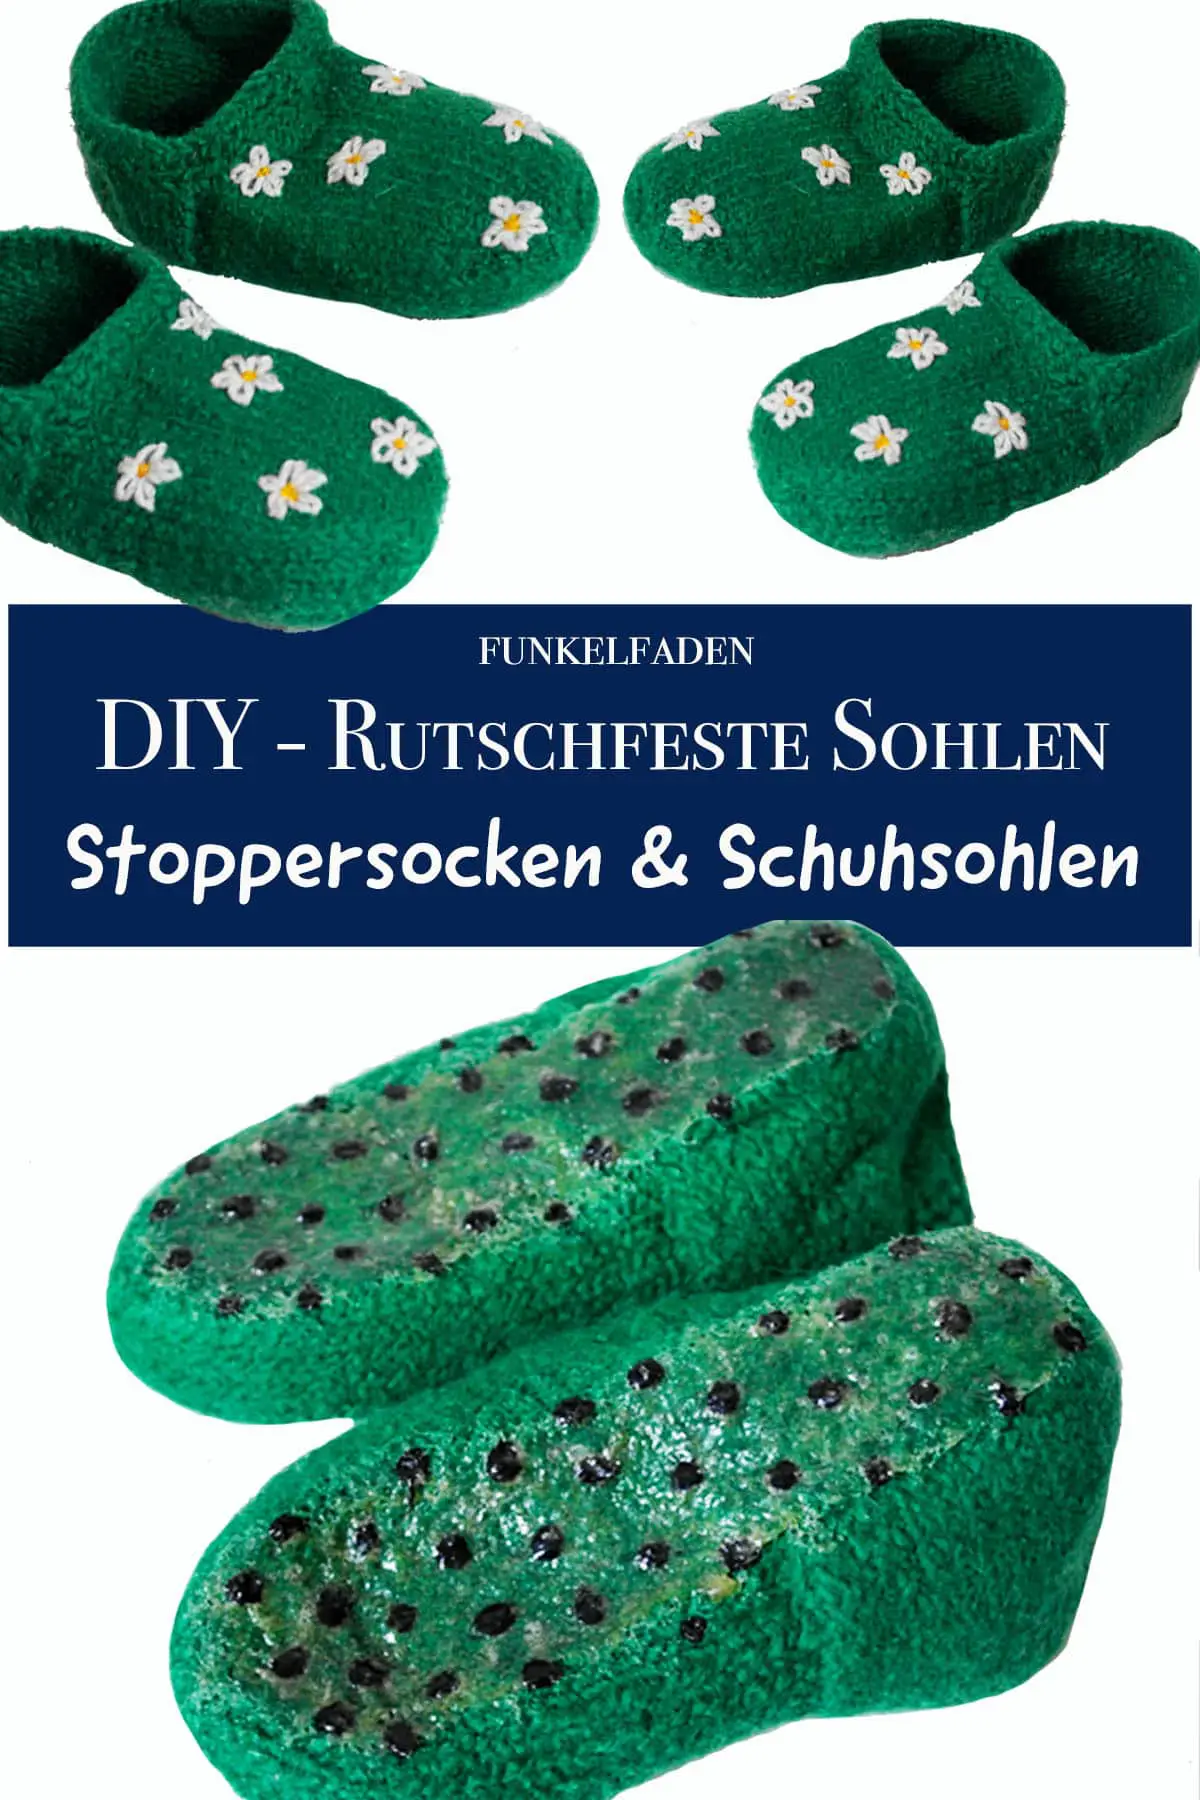 DIY - ABS-Socken selbermachen - Rutschfeste Sohlen